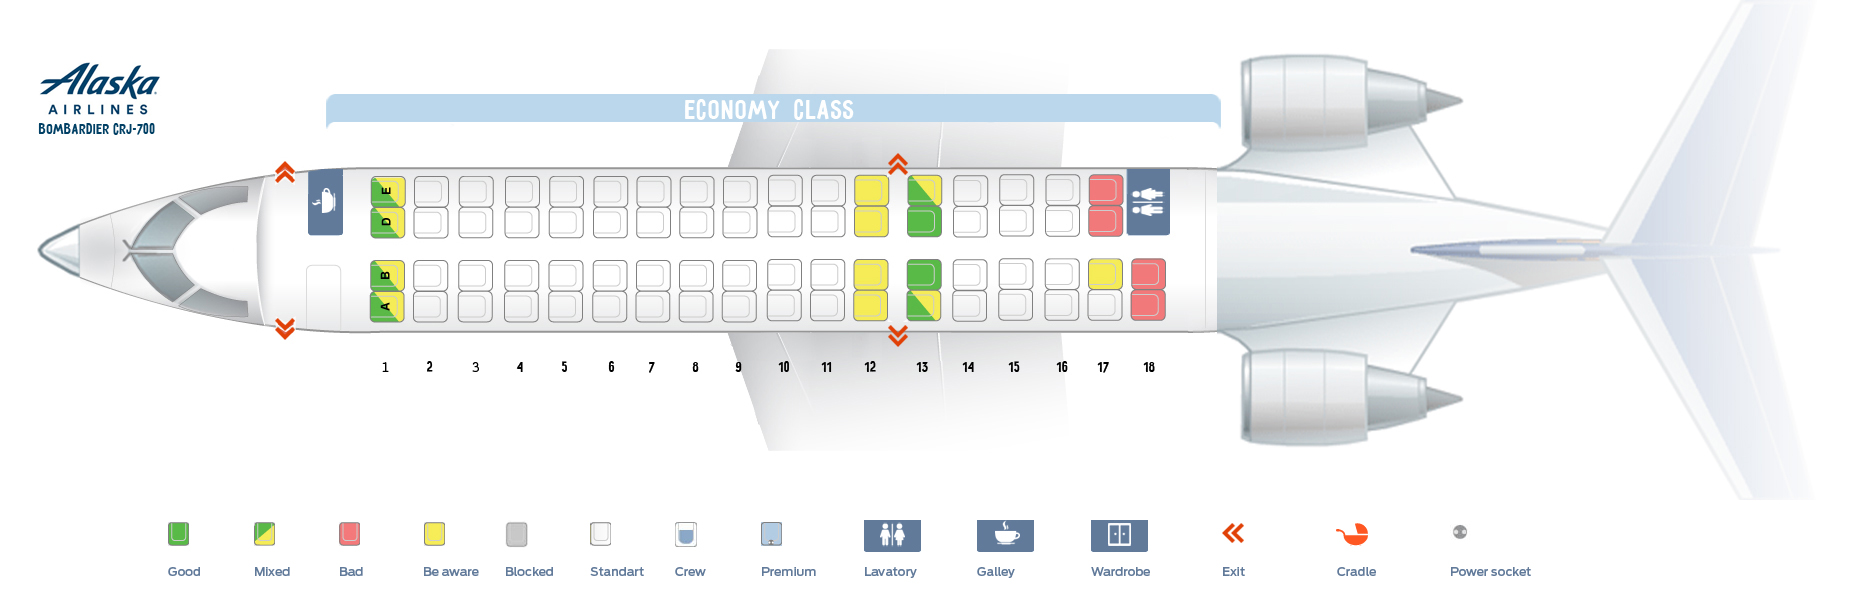 Alaska Airlines Plane Seating Chart